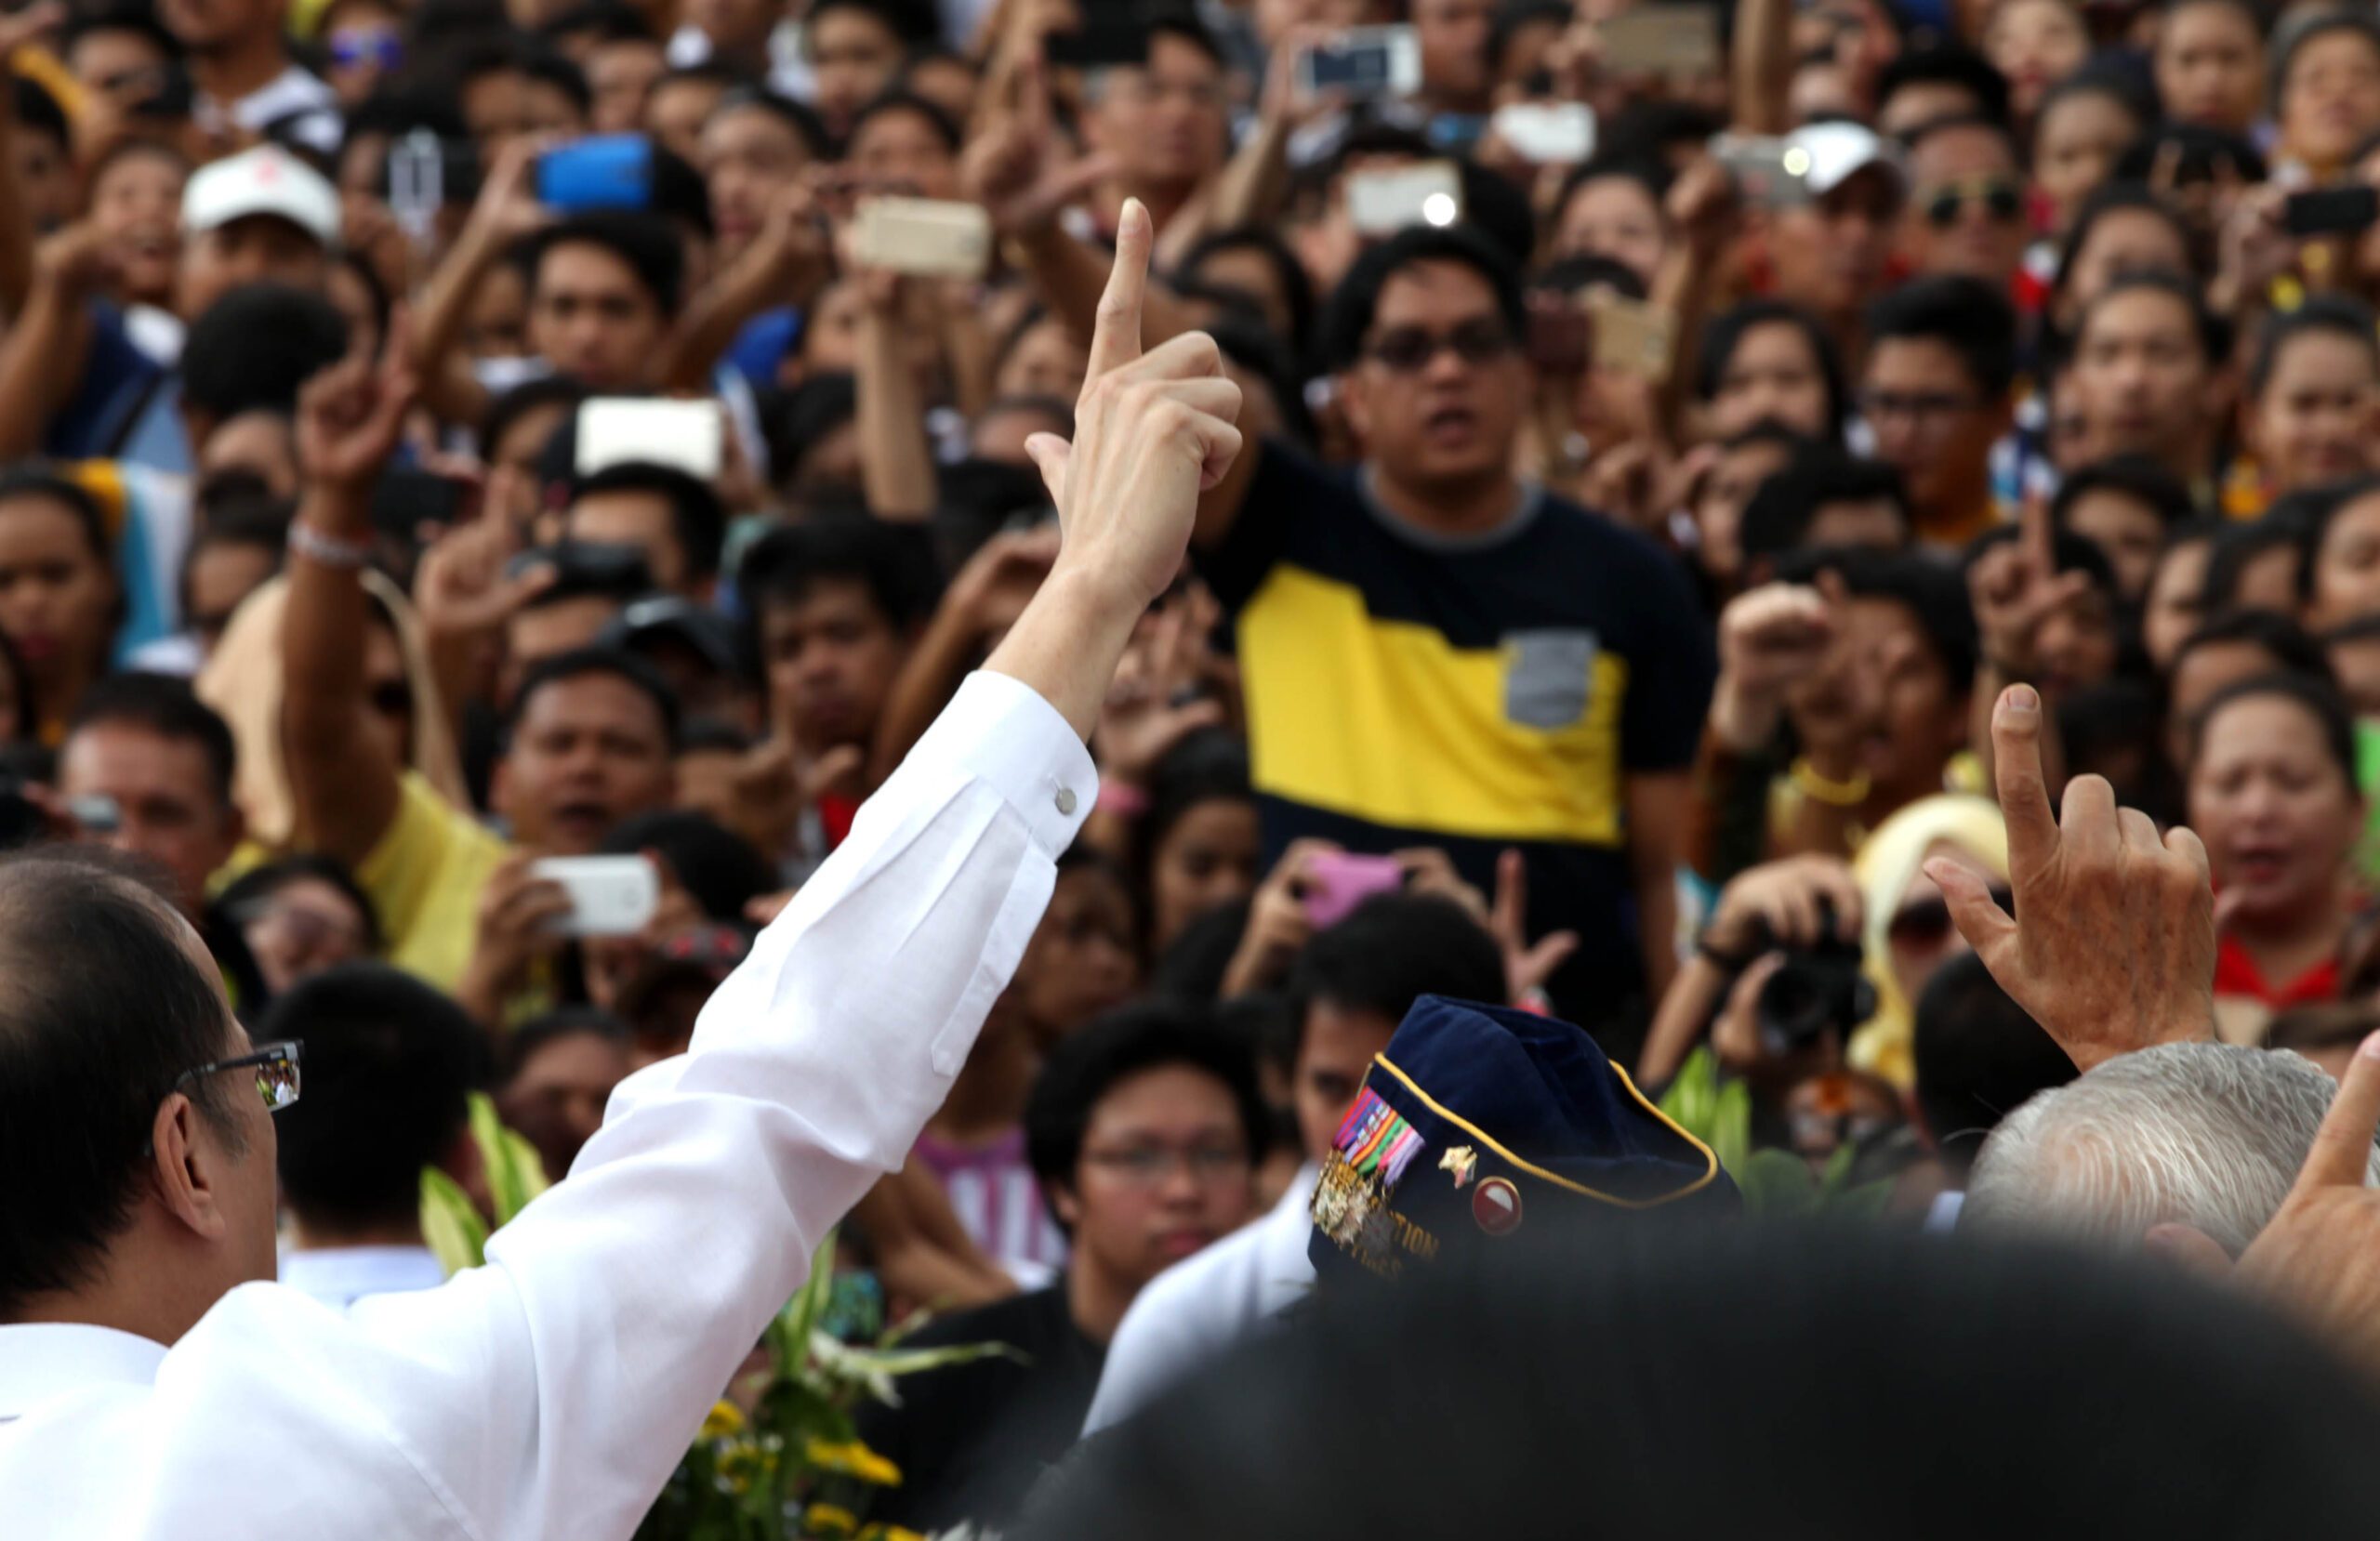 Palace on Aquino’s anti-Marcos remarks: ‘Truth vs amnesia’